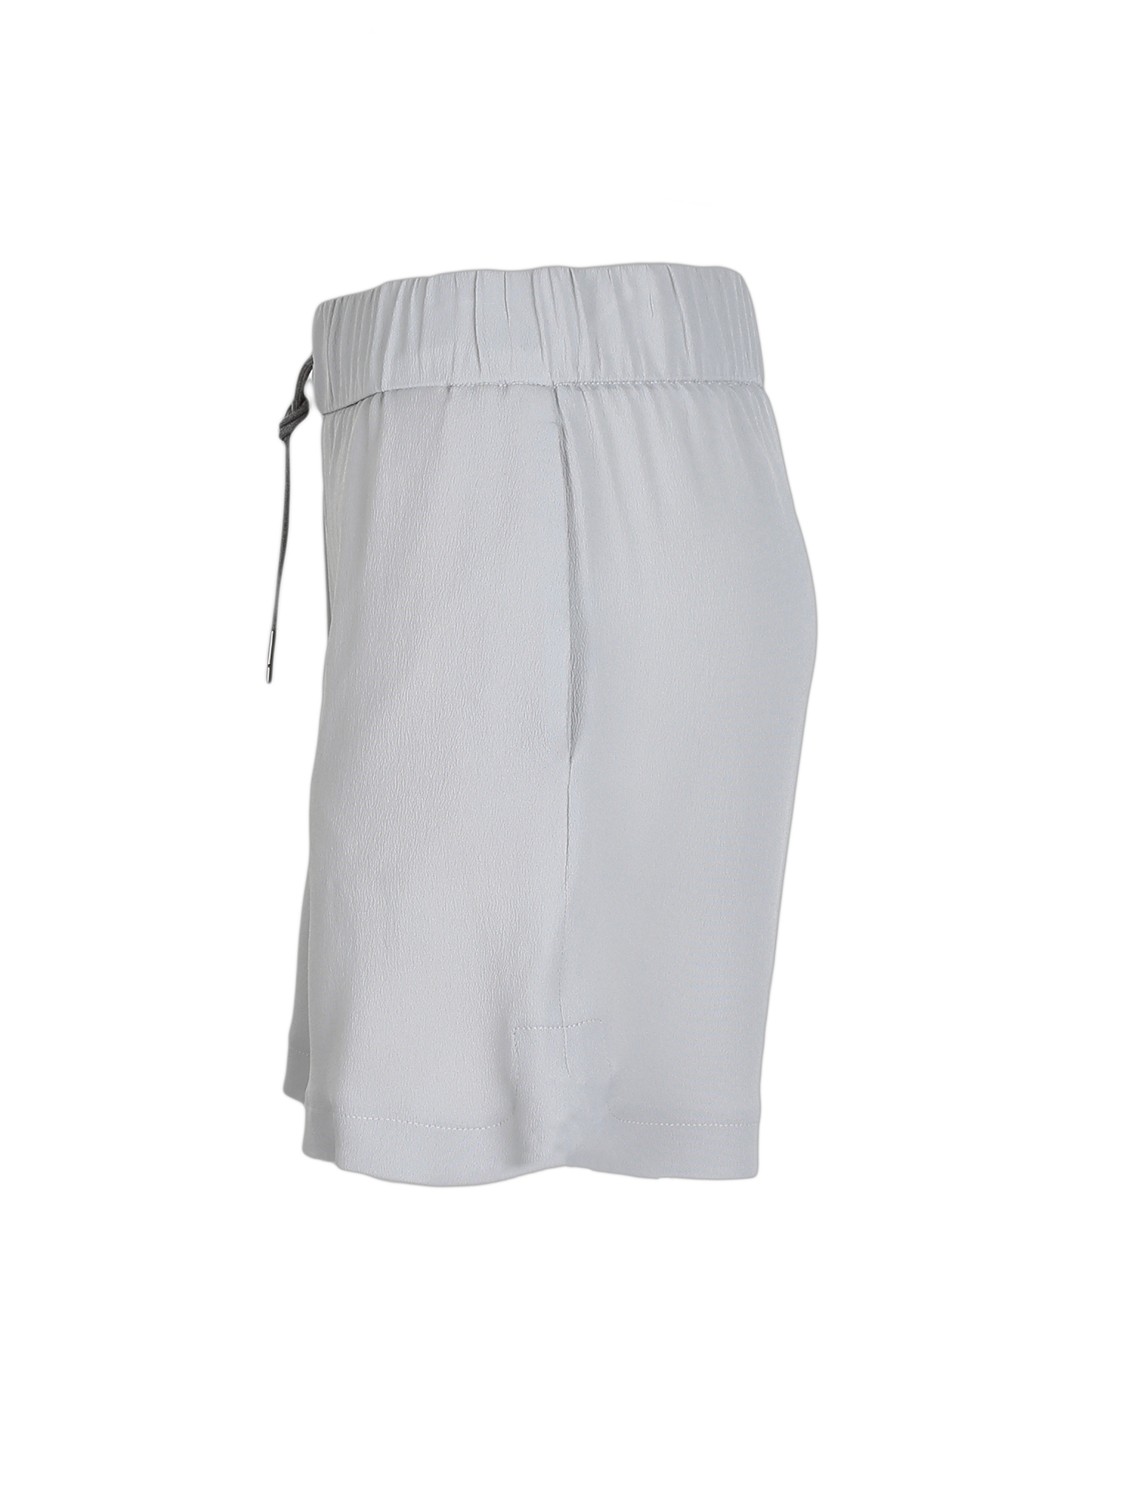 shop FABIANA FILIPPI Saldi Pantalone: Fabiana Filippi pantaloni bermuda in marocaine di seta.
Vita alta con coulisse.
Shorts.
Regular fit.
Composizione: 57% acetato 43% seta.. PA78719 H438-8129 number 4290220